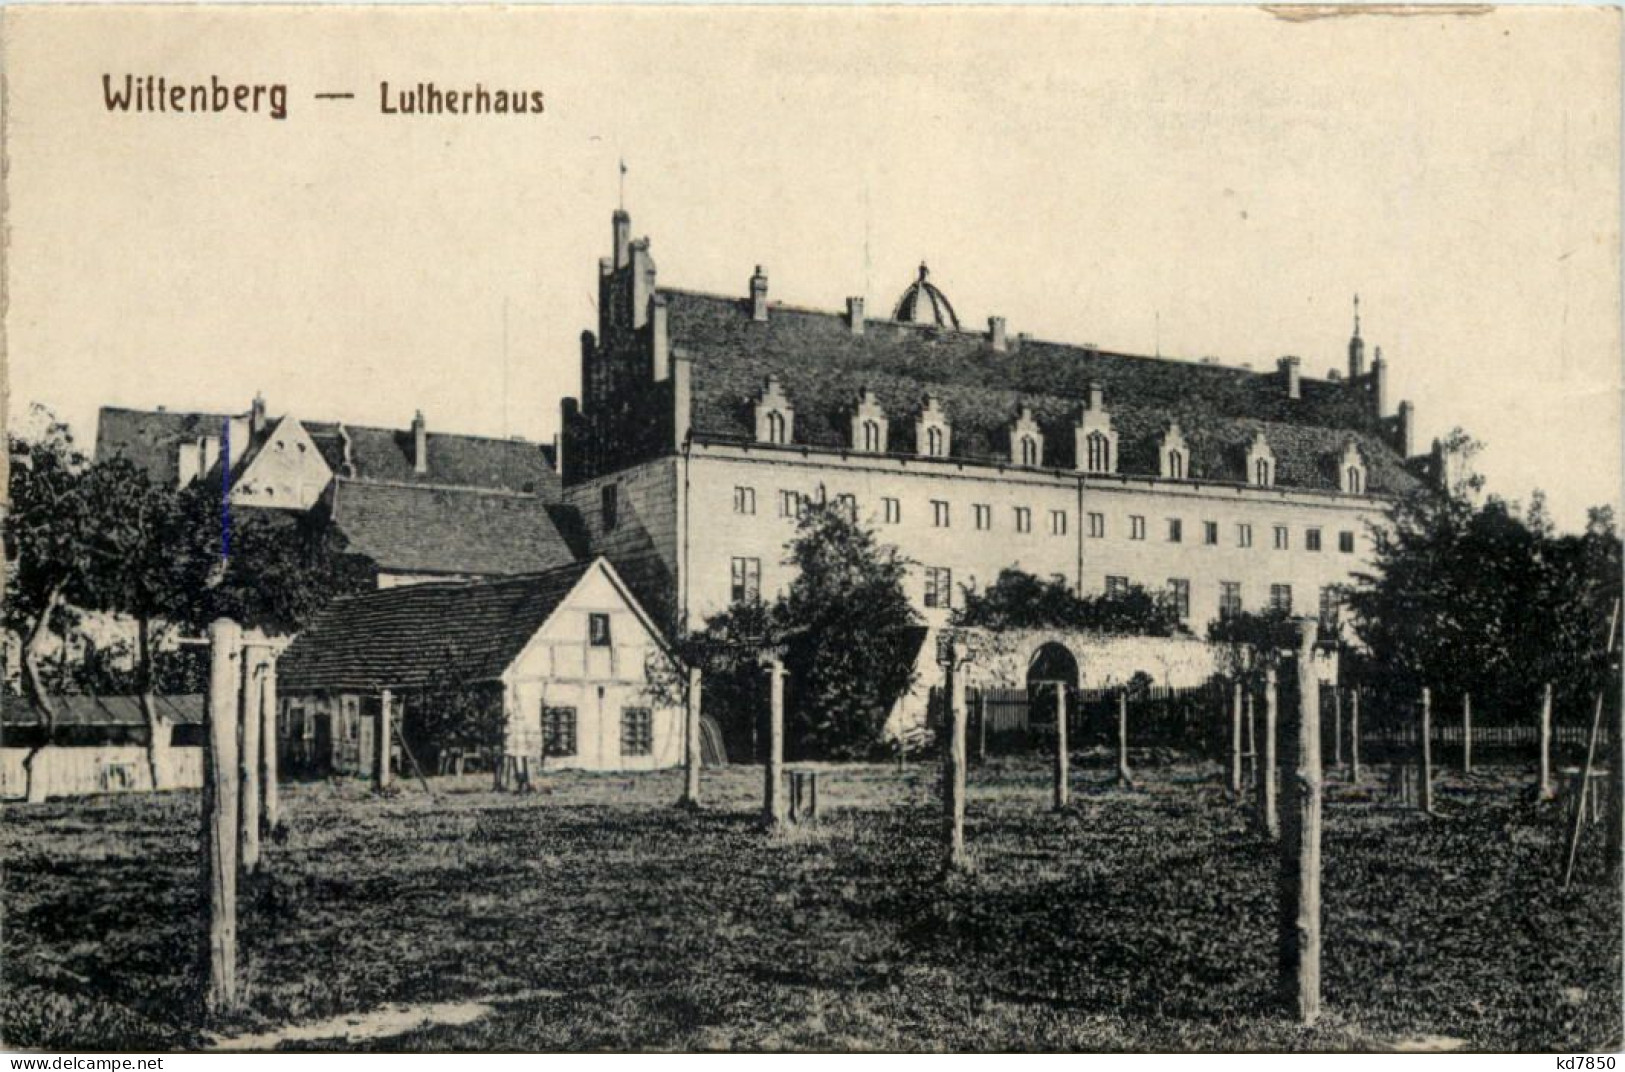 Wittenberg - Lutherhaus - Wittenberg